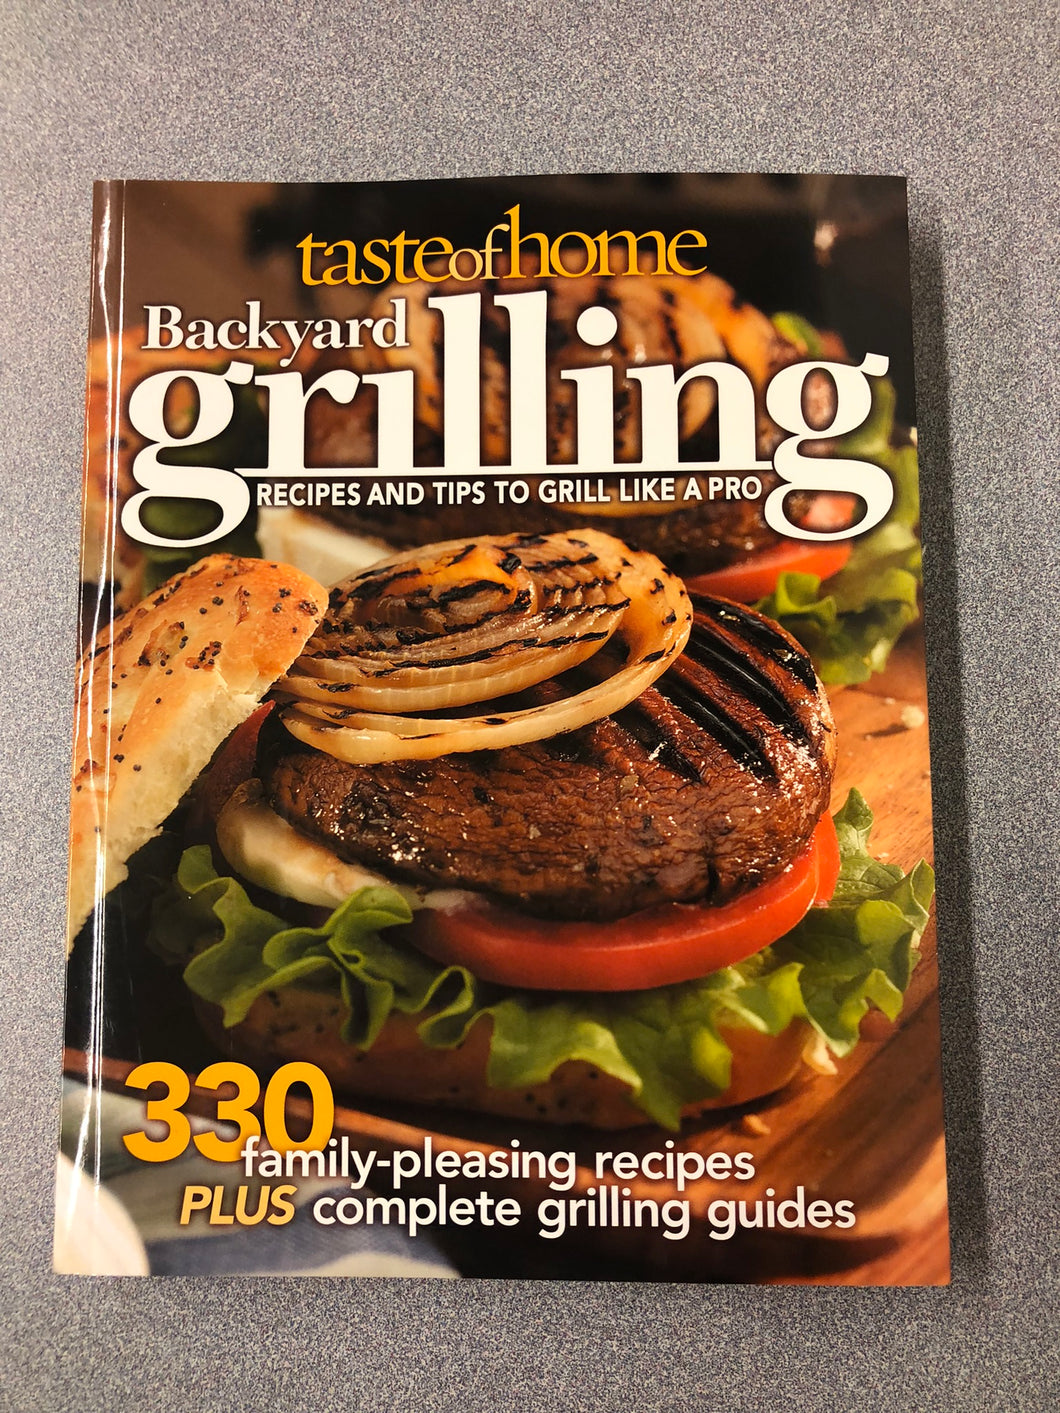 Taste of Home Backyard Grilling: Recipes and Tips to Grill Like a Pro, Olski, Jennifer, ed., [2006] CO 7/22